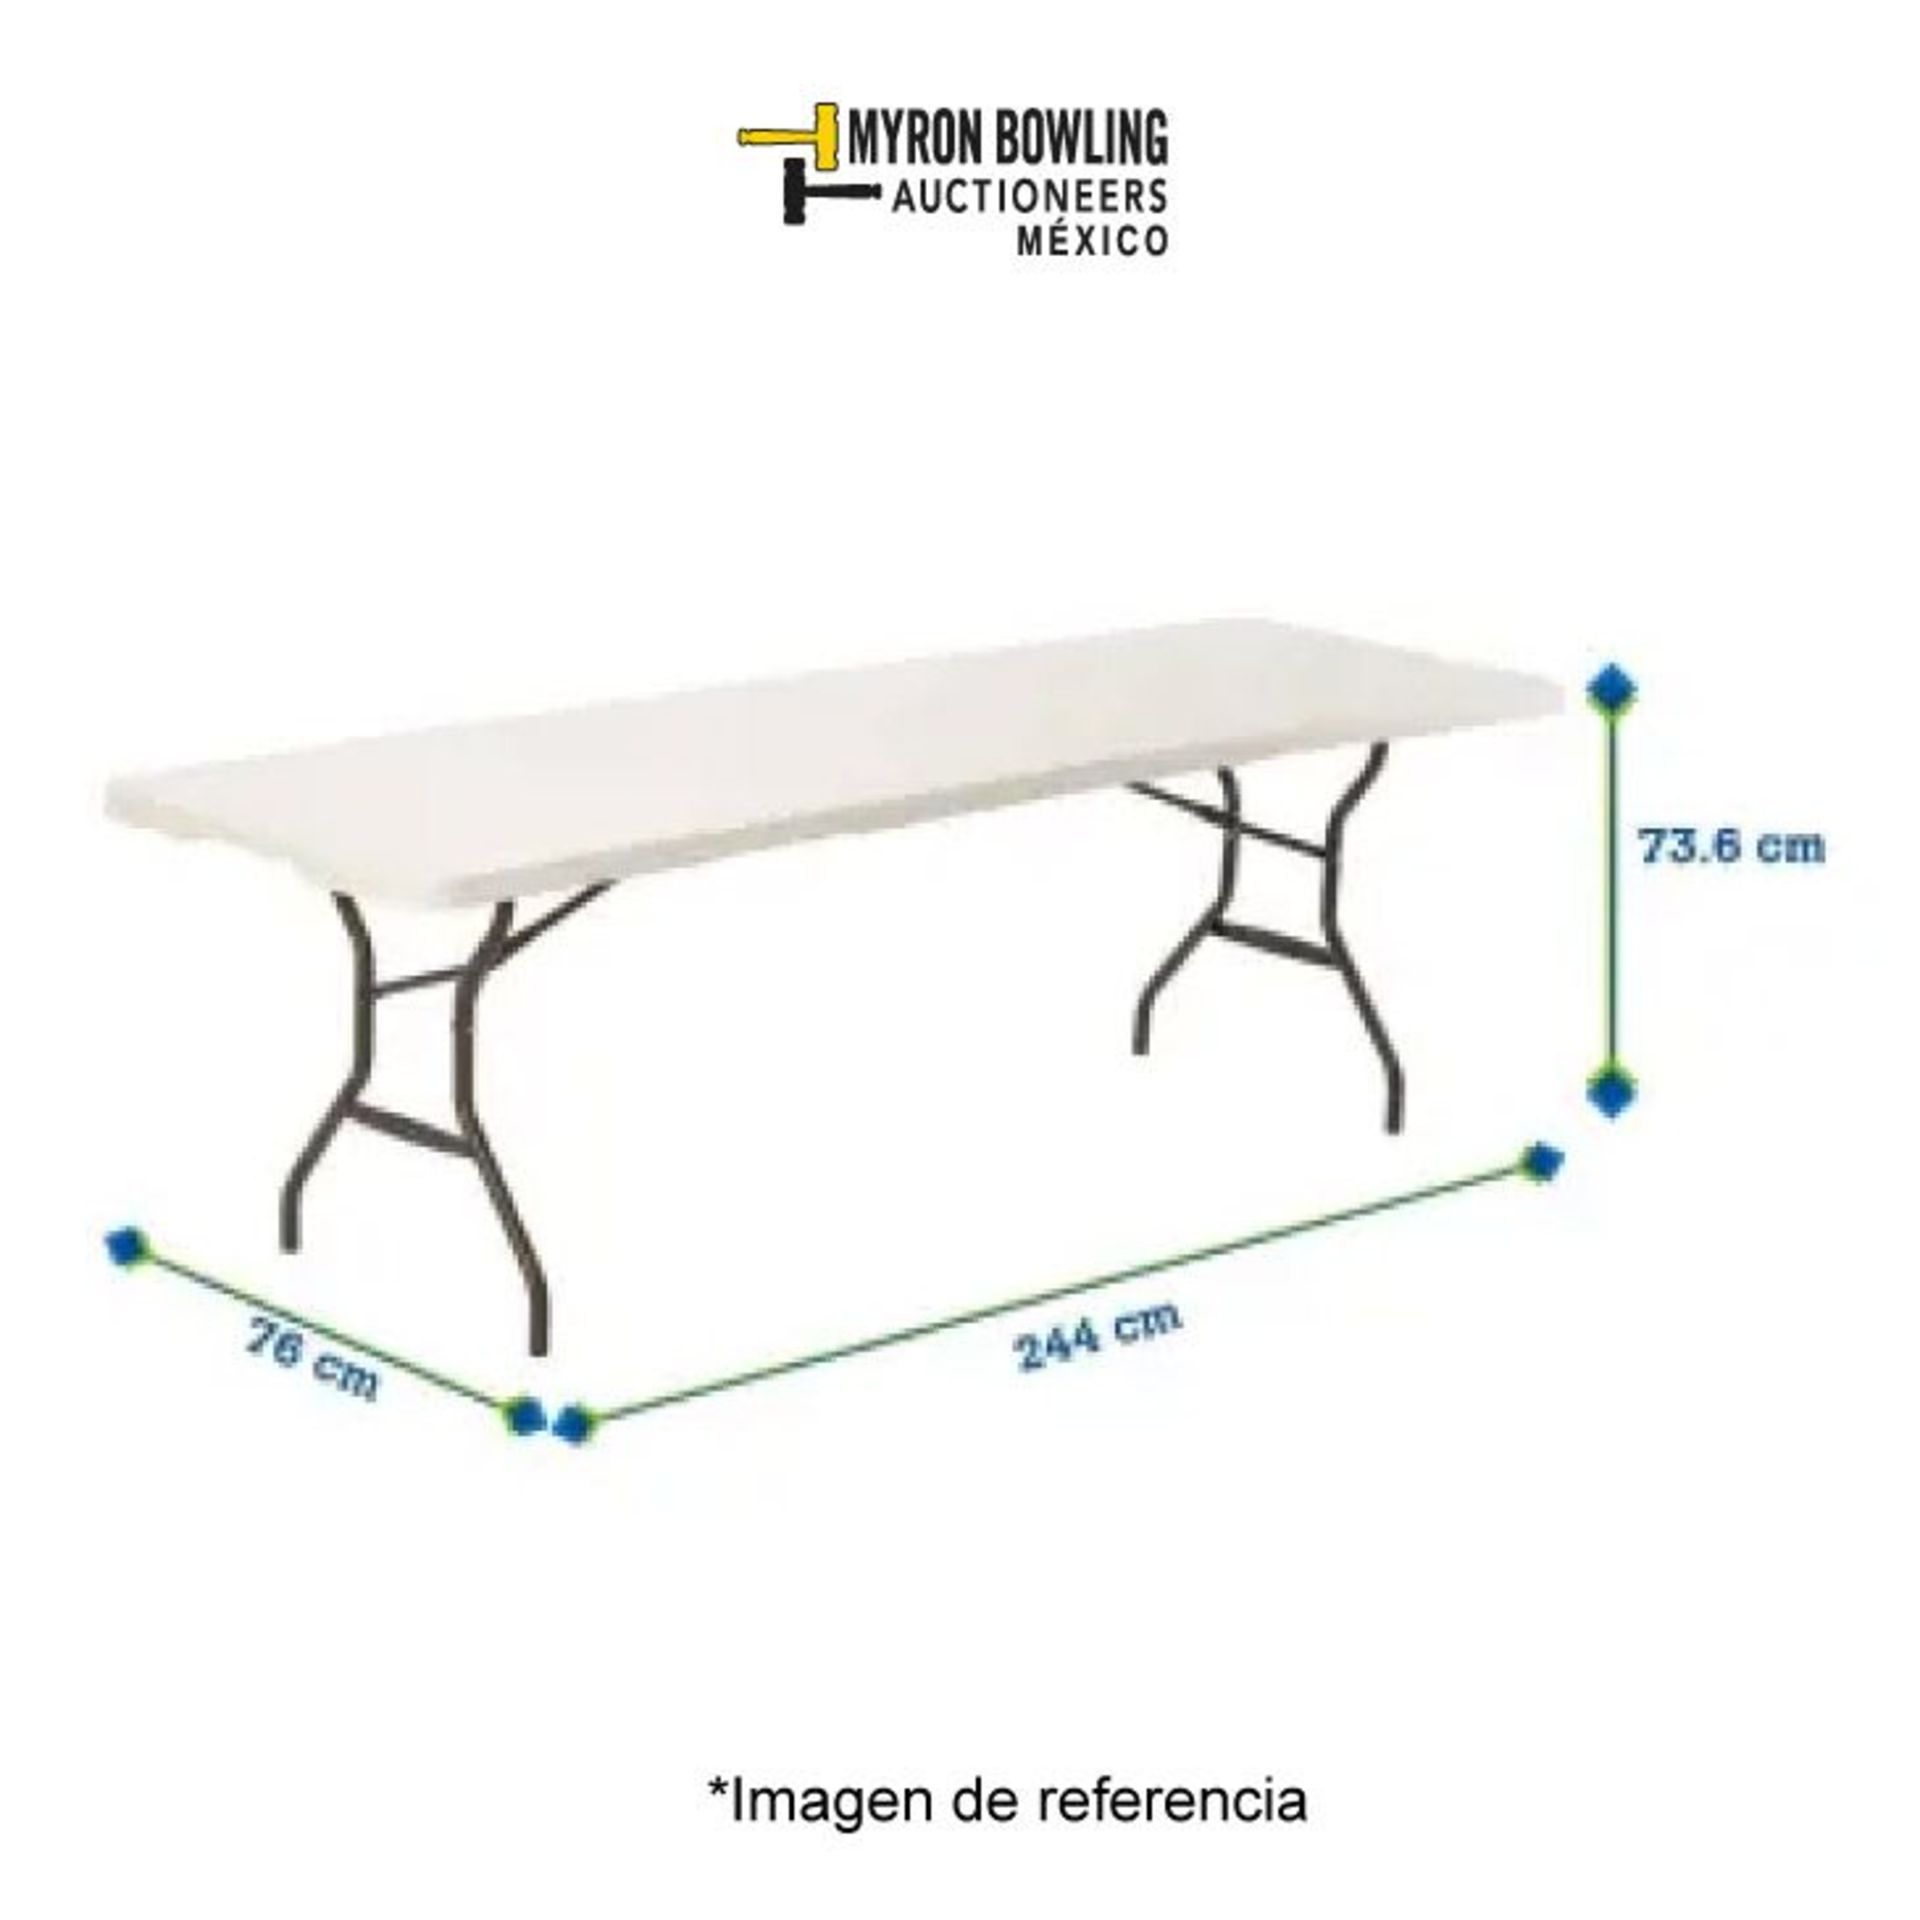 (NUEVO) Lote de 6 piezas contiene: 1 mesa plegable de 2,44m LIFETIME; 1 mesa plegable de 94 cm LIFE